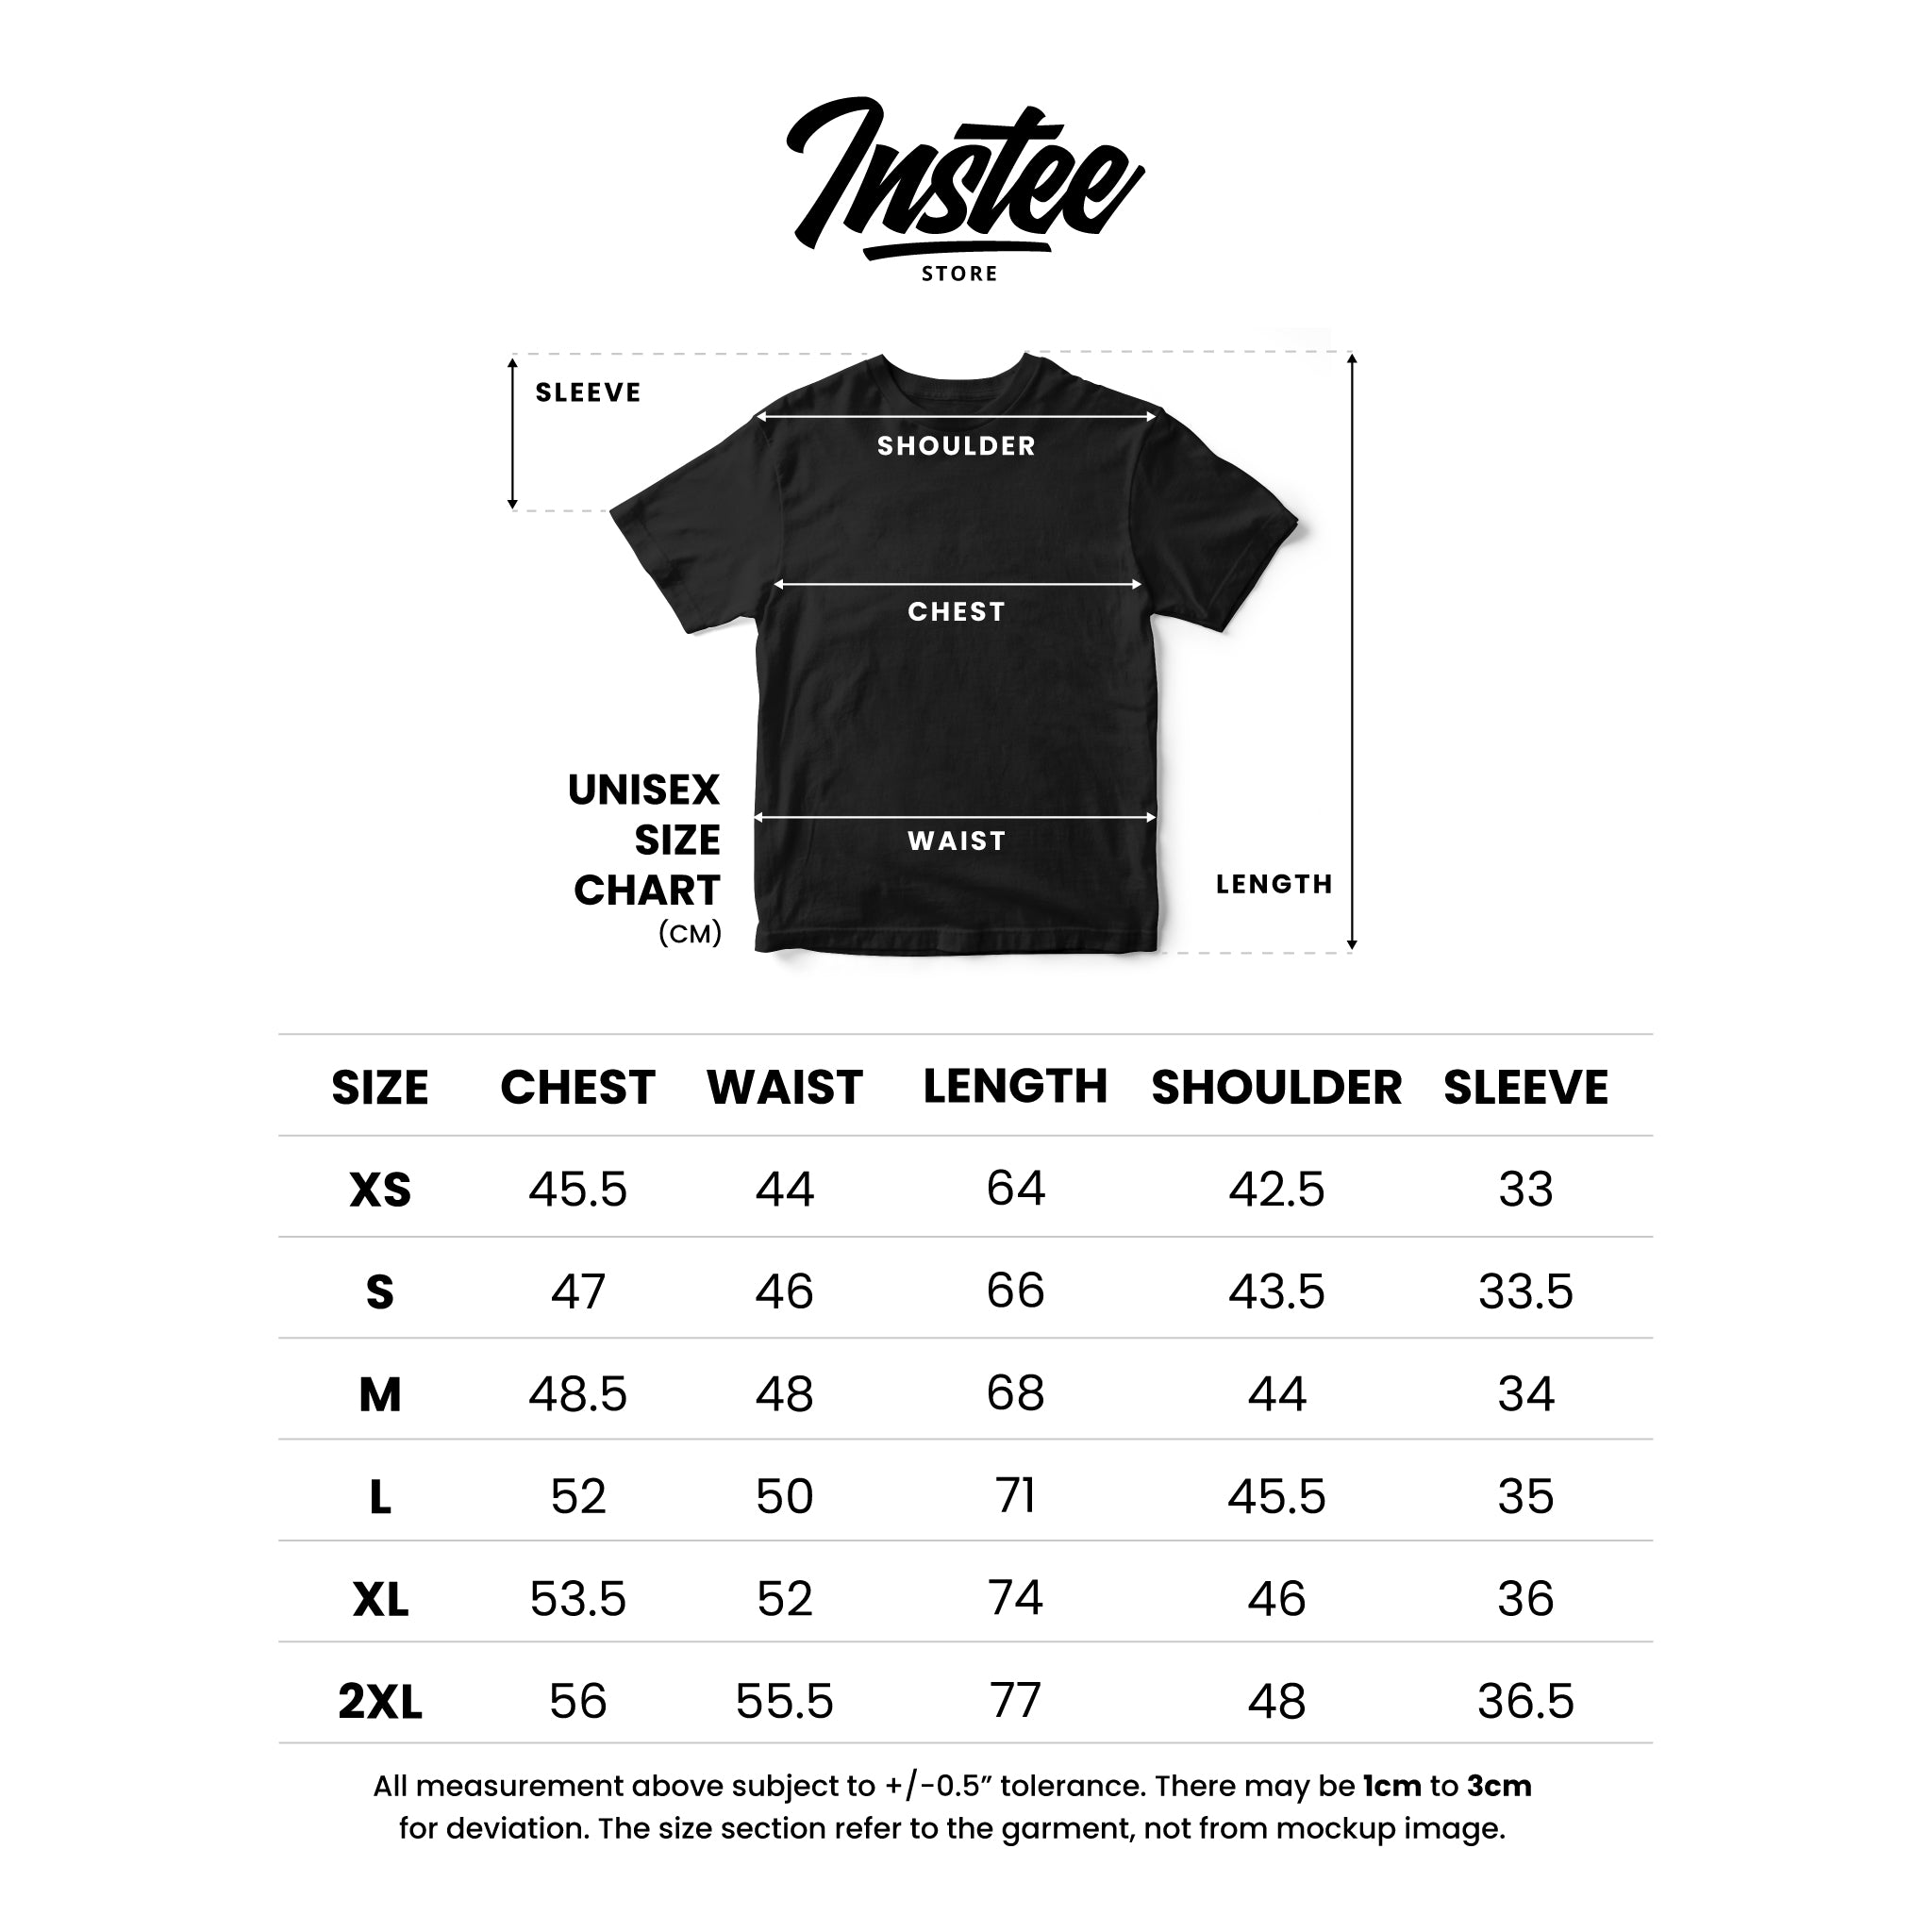 Instee Sunshine T-shirt Unisex 100% Cotton